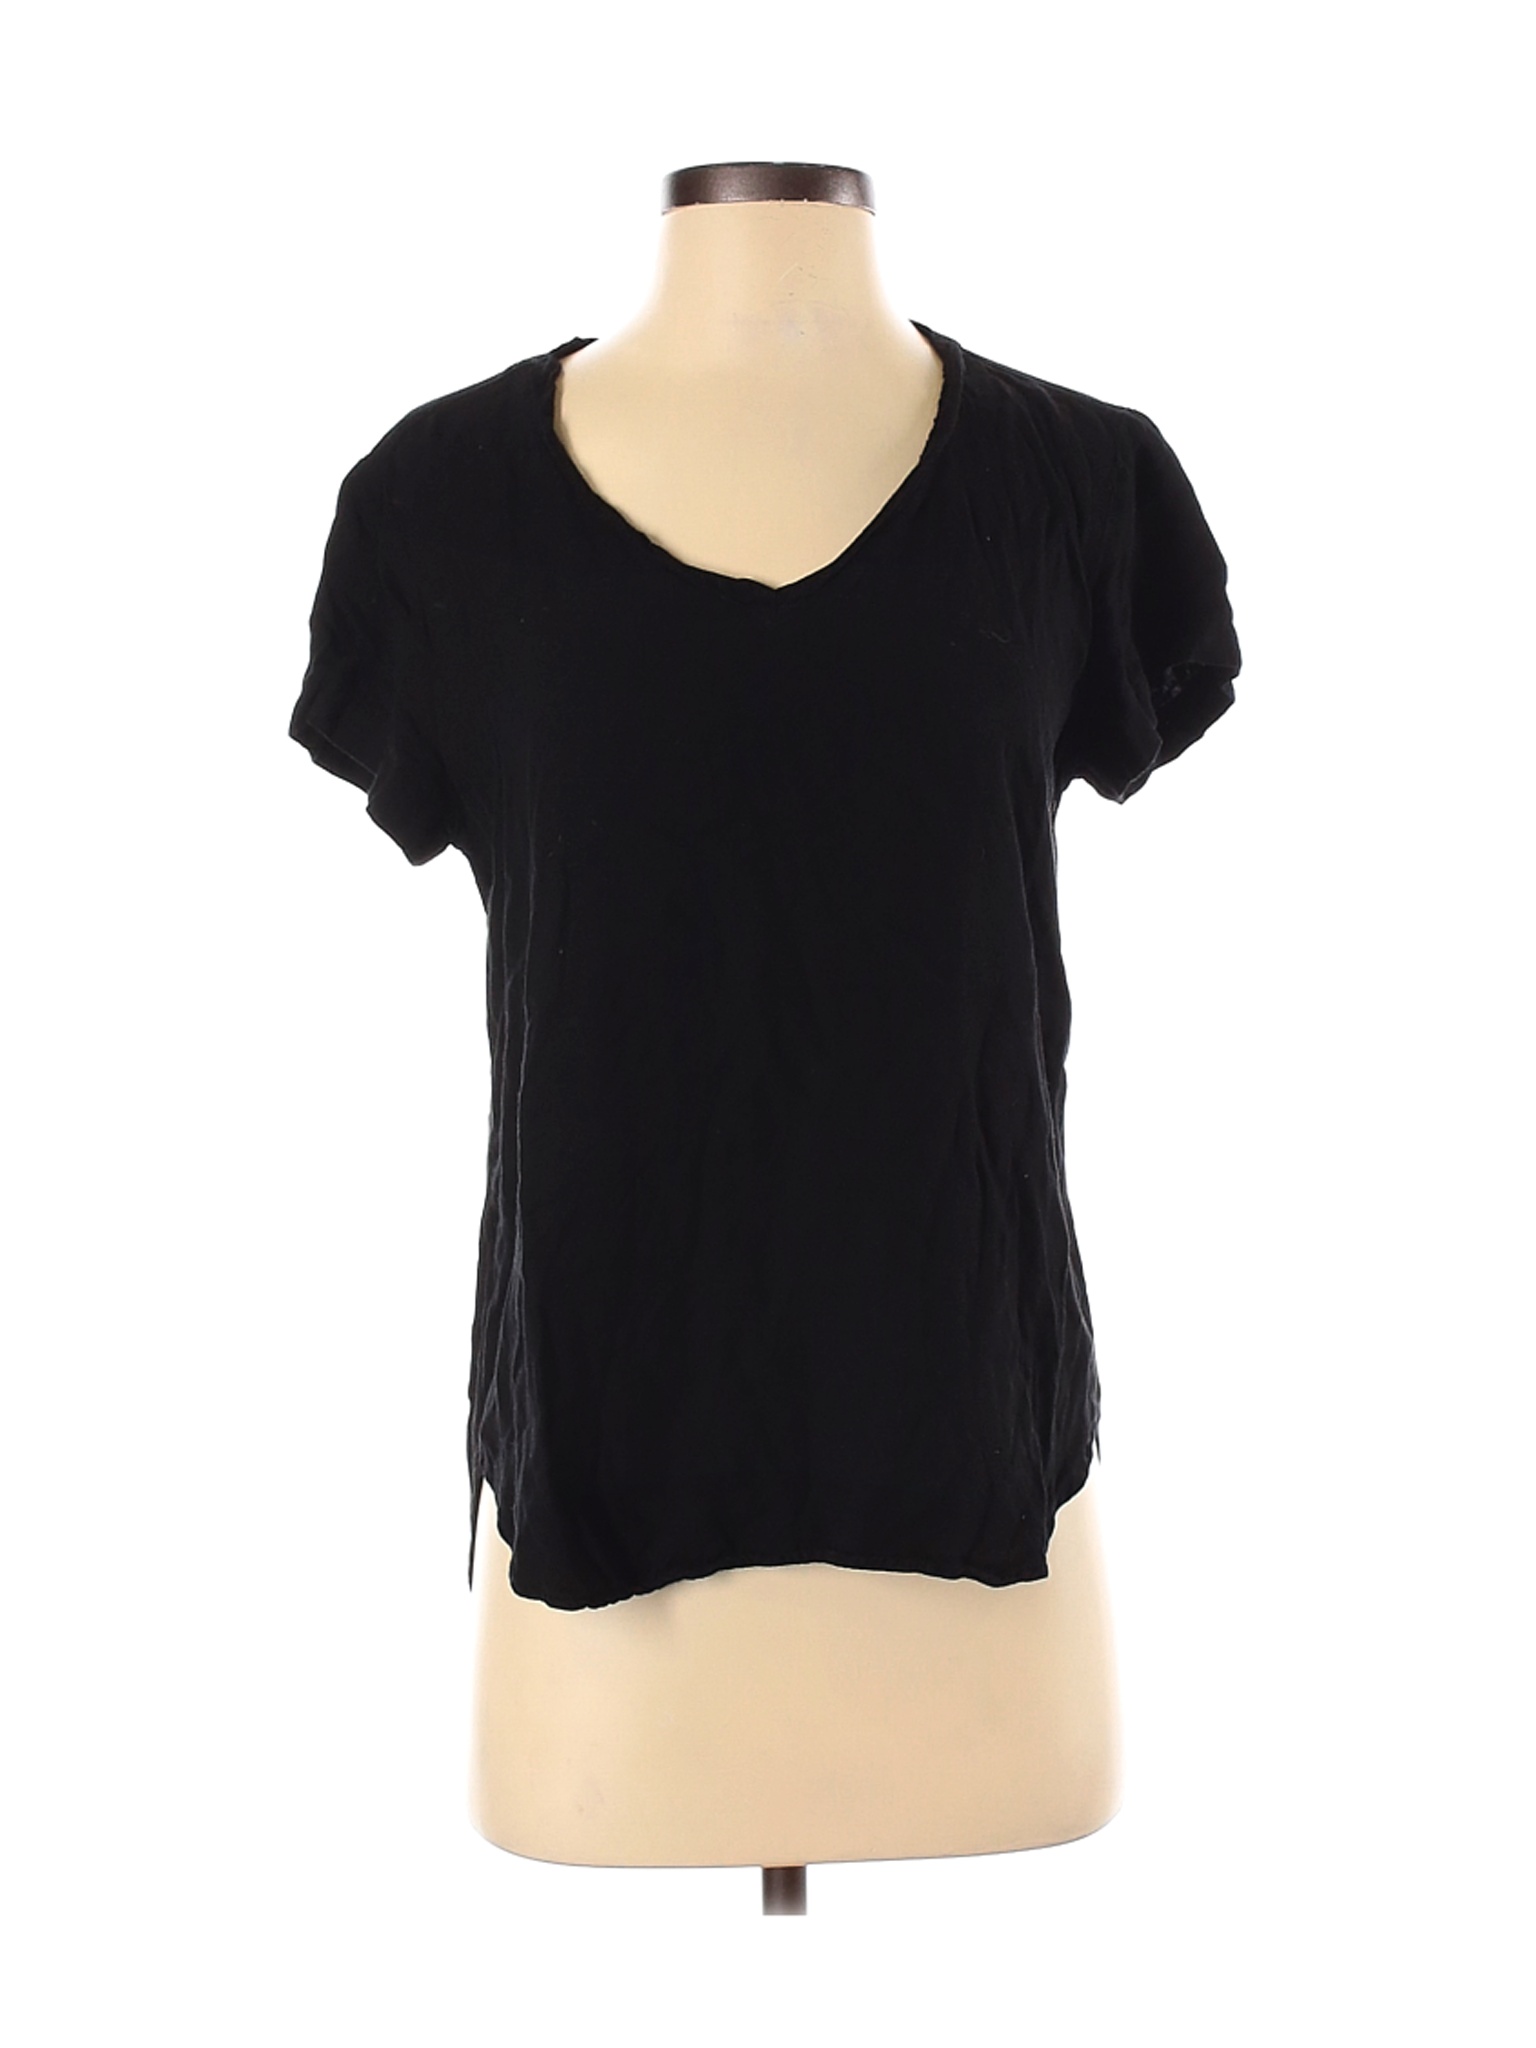 Cloth & Stone Women Black Short Sleeve Top S | eBay